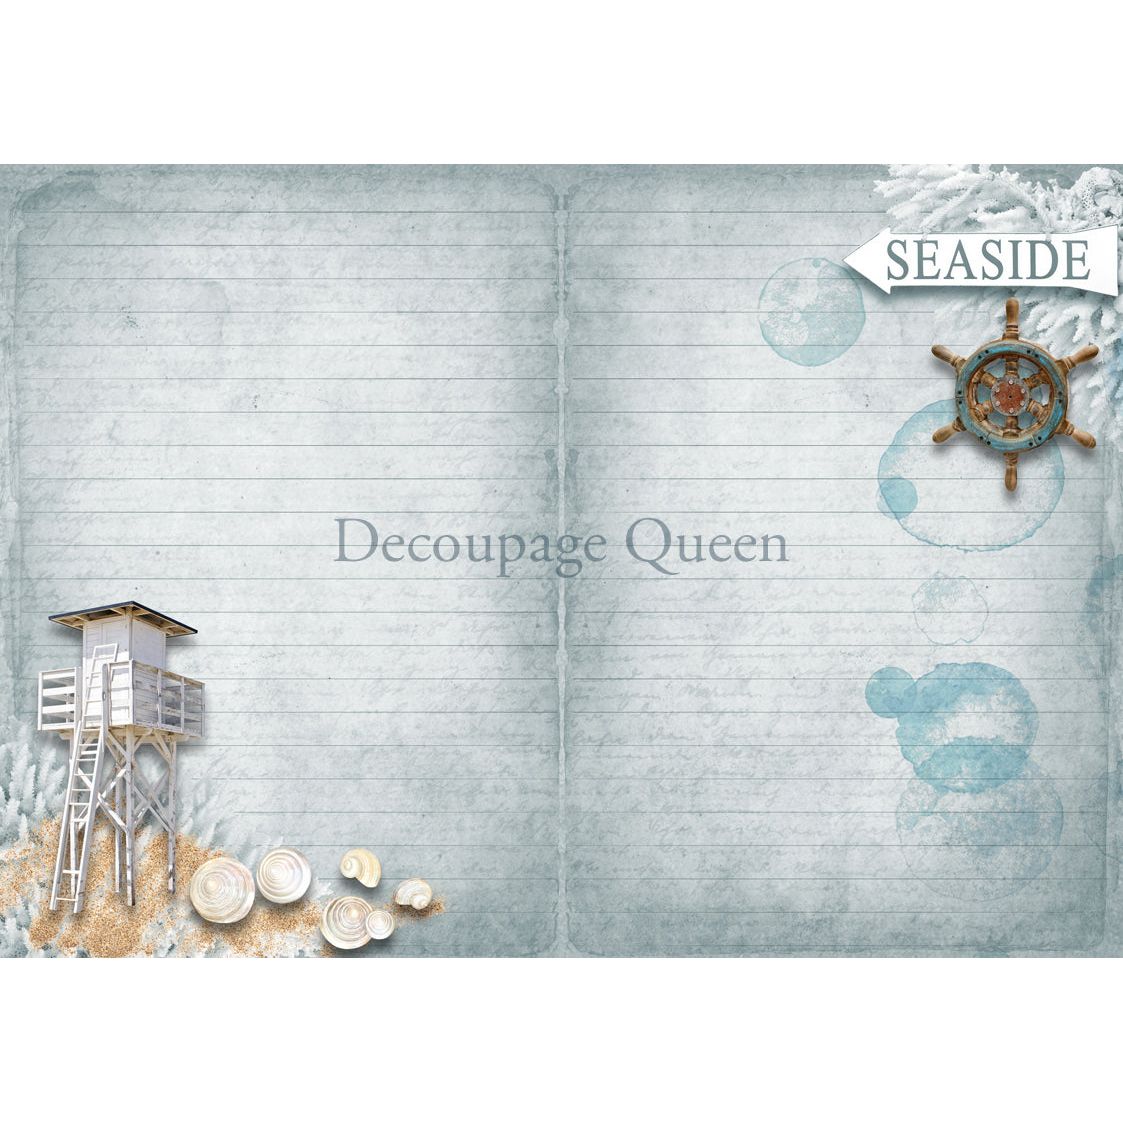 Decoupage Queen Seaside Greetings Journal Kit